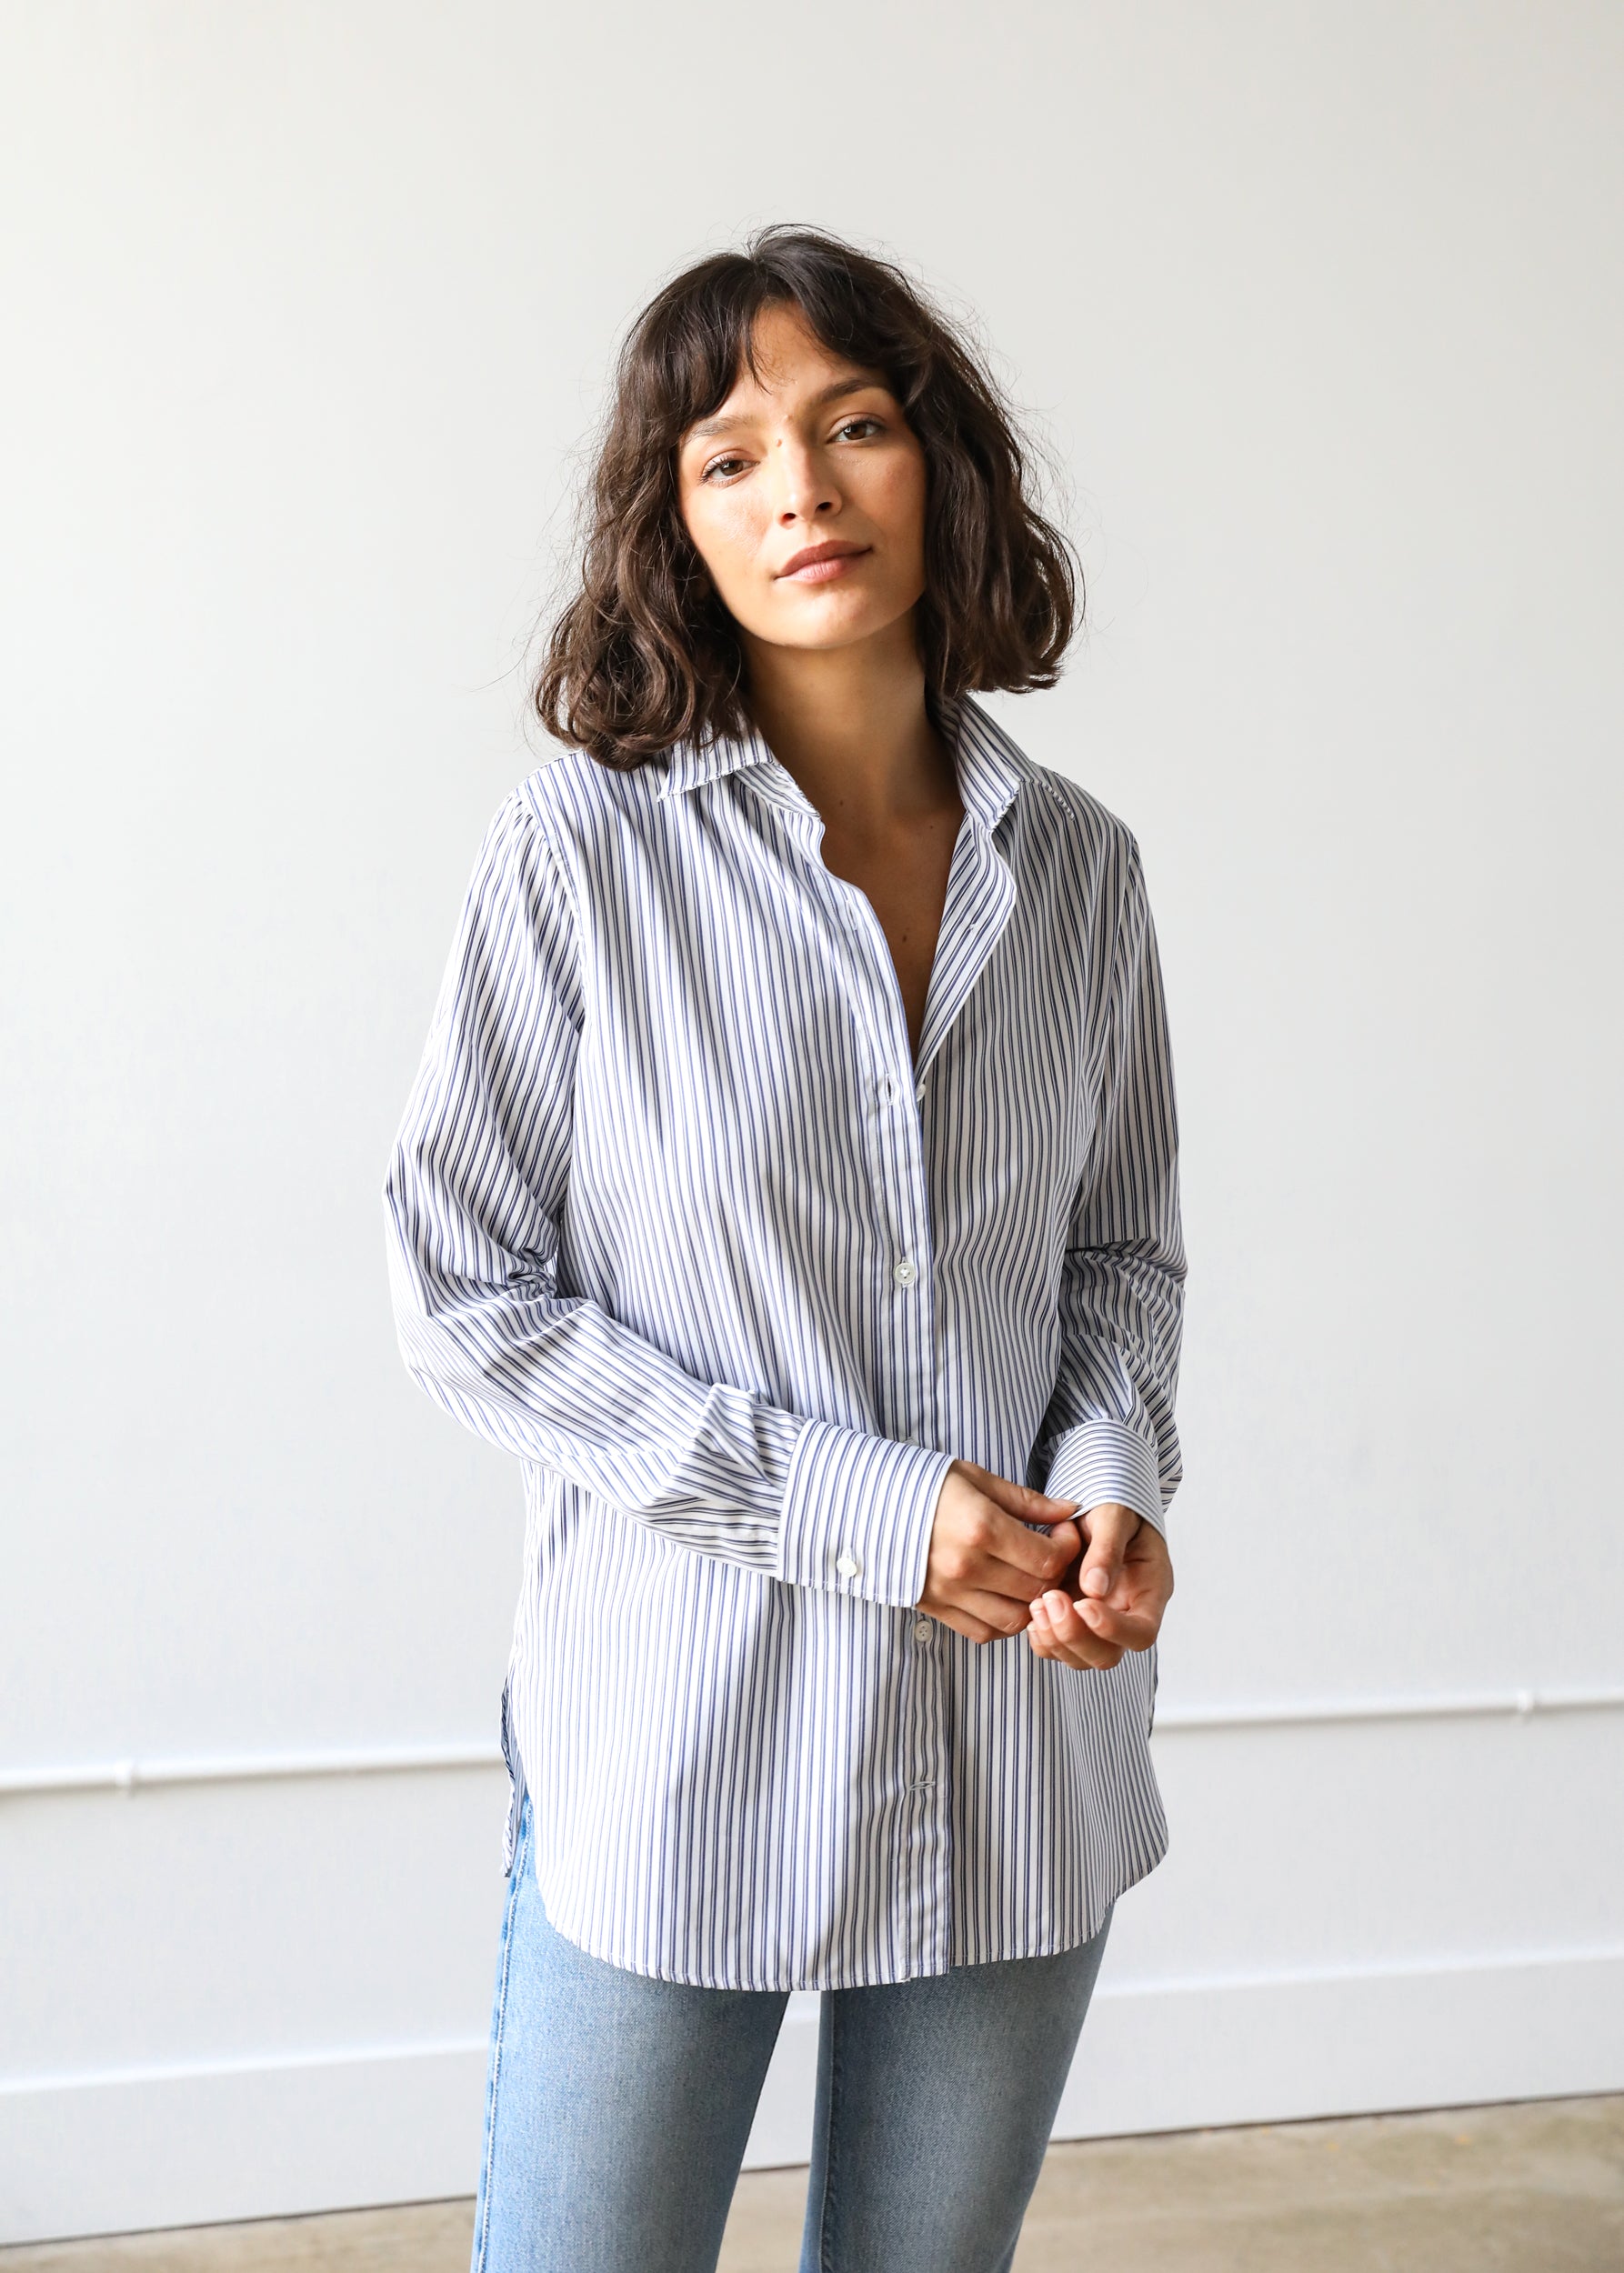 Estella NYC Gemma Button Up Shirt in Mini Blue Stripe Cotton Poplin